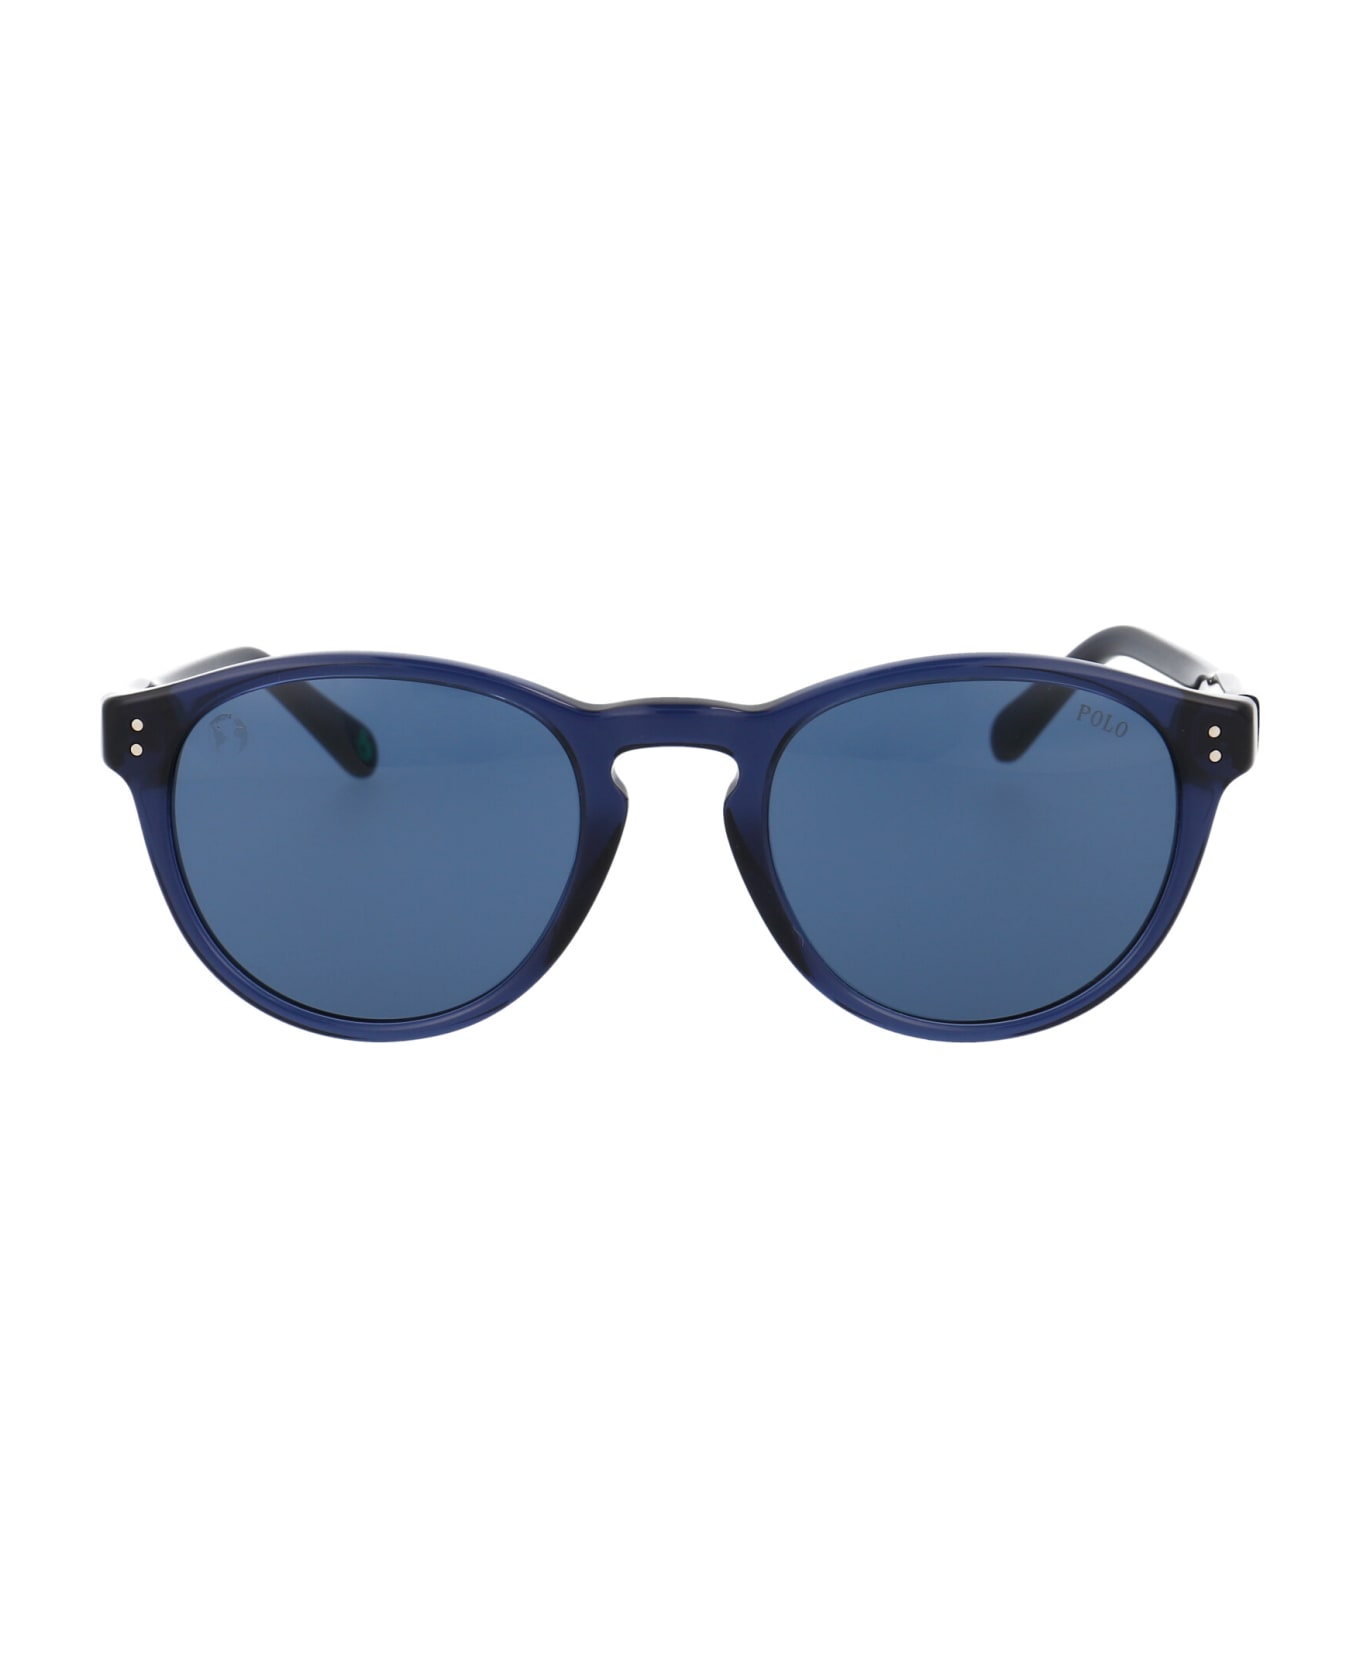 Polo Ralph Lauren 0ph4172 Sunglasses - 595580 SHINY TRANSPARENT BLUE